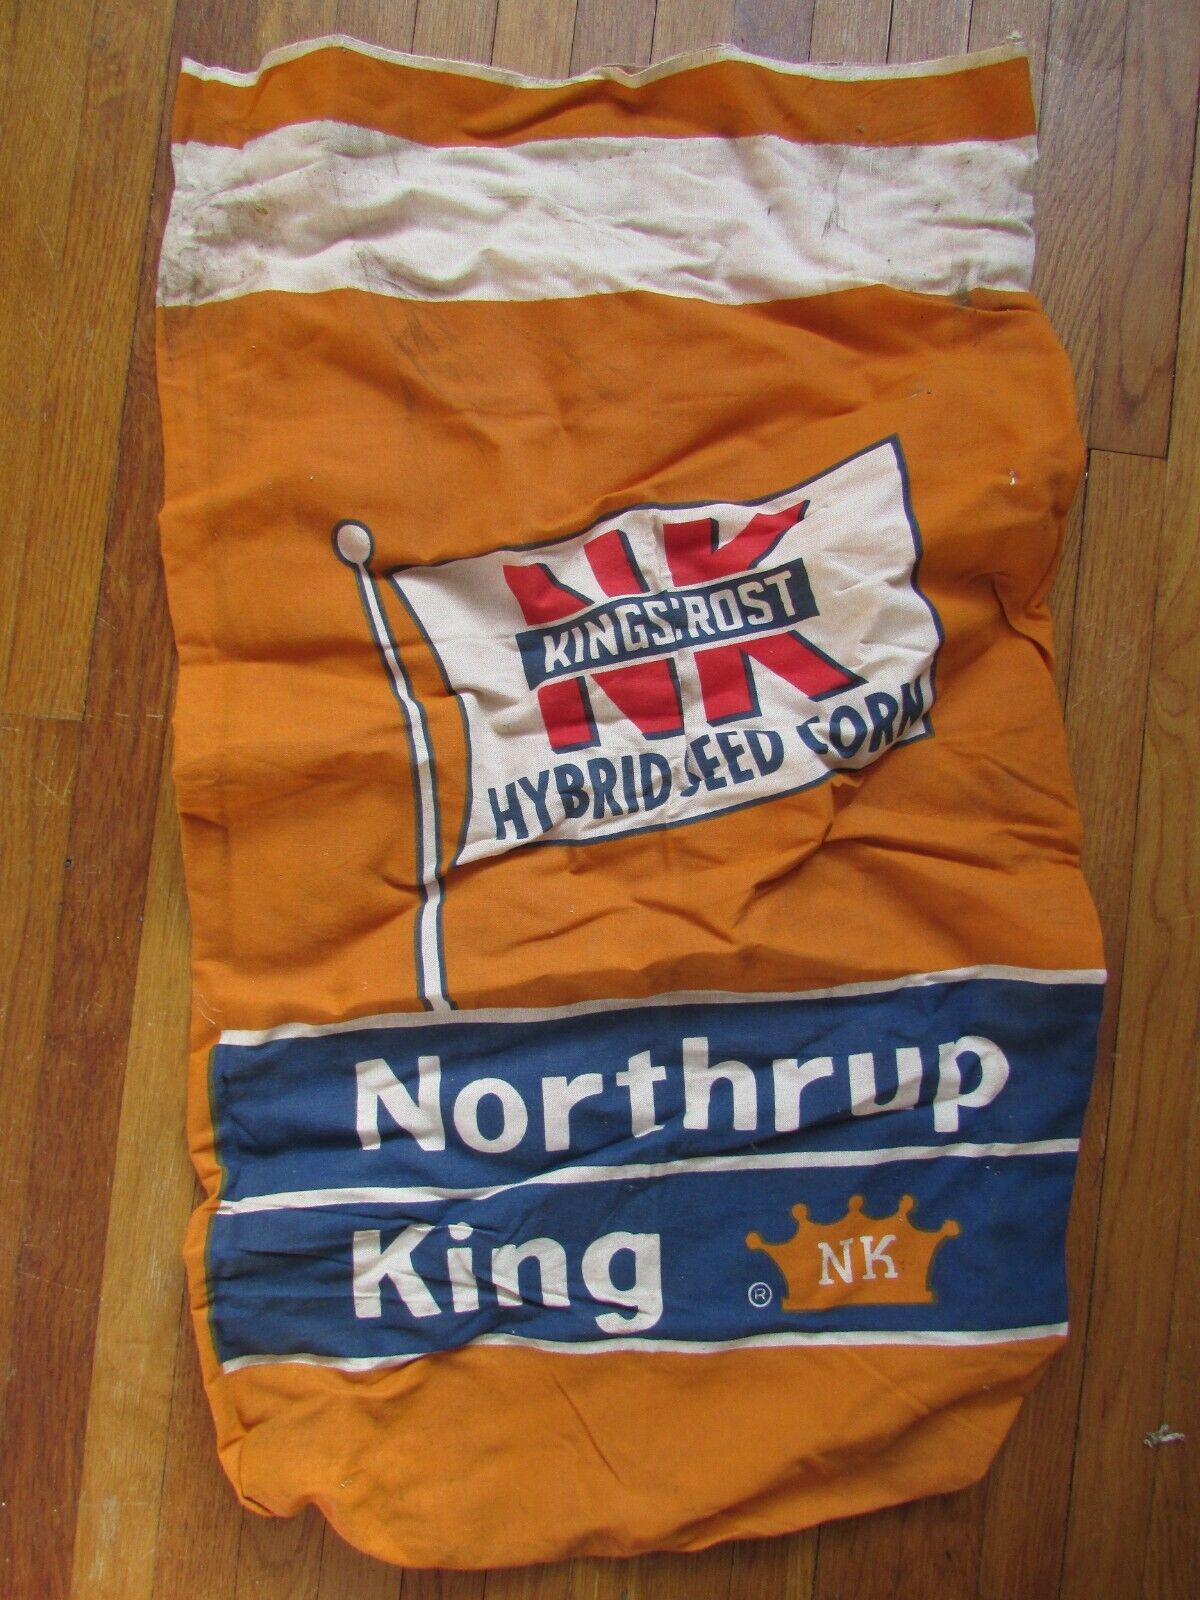 Northrup King Kingscrost NK Seed Corn Bag